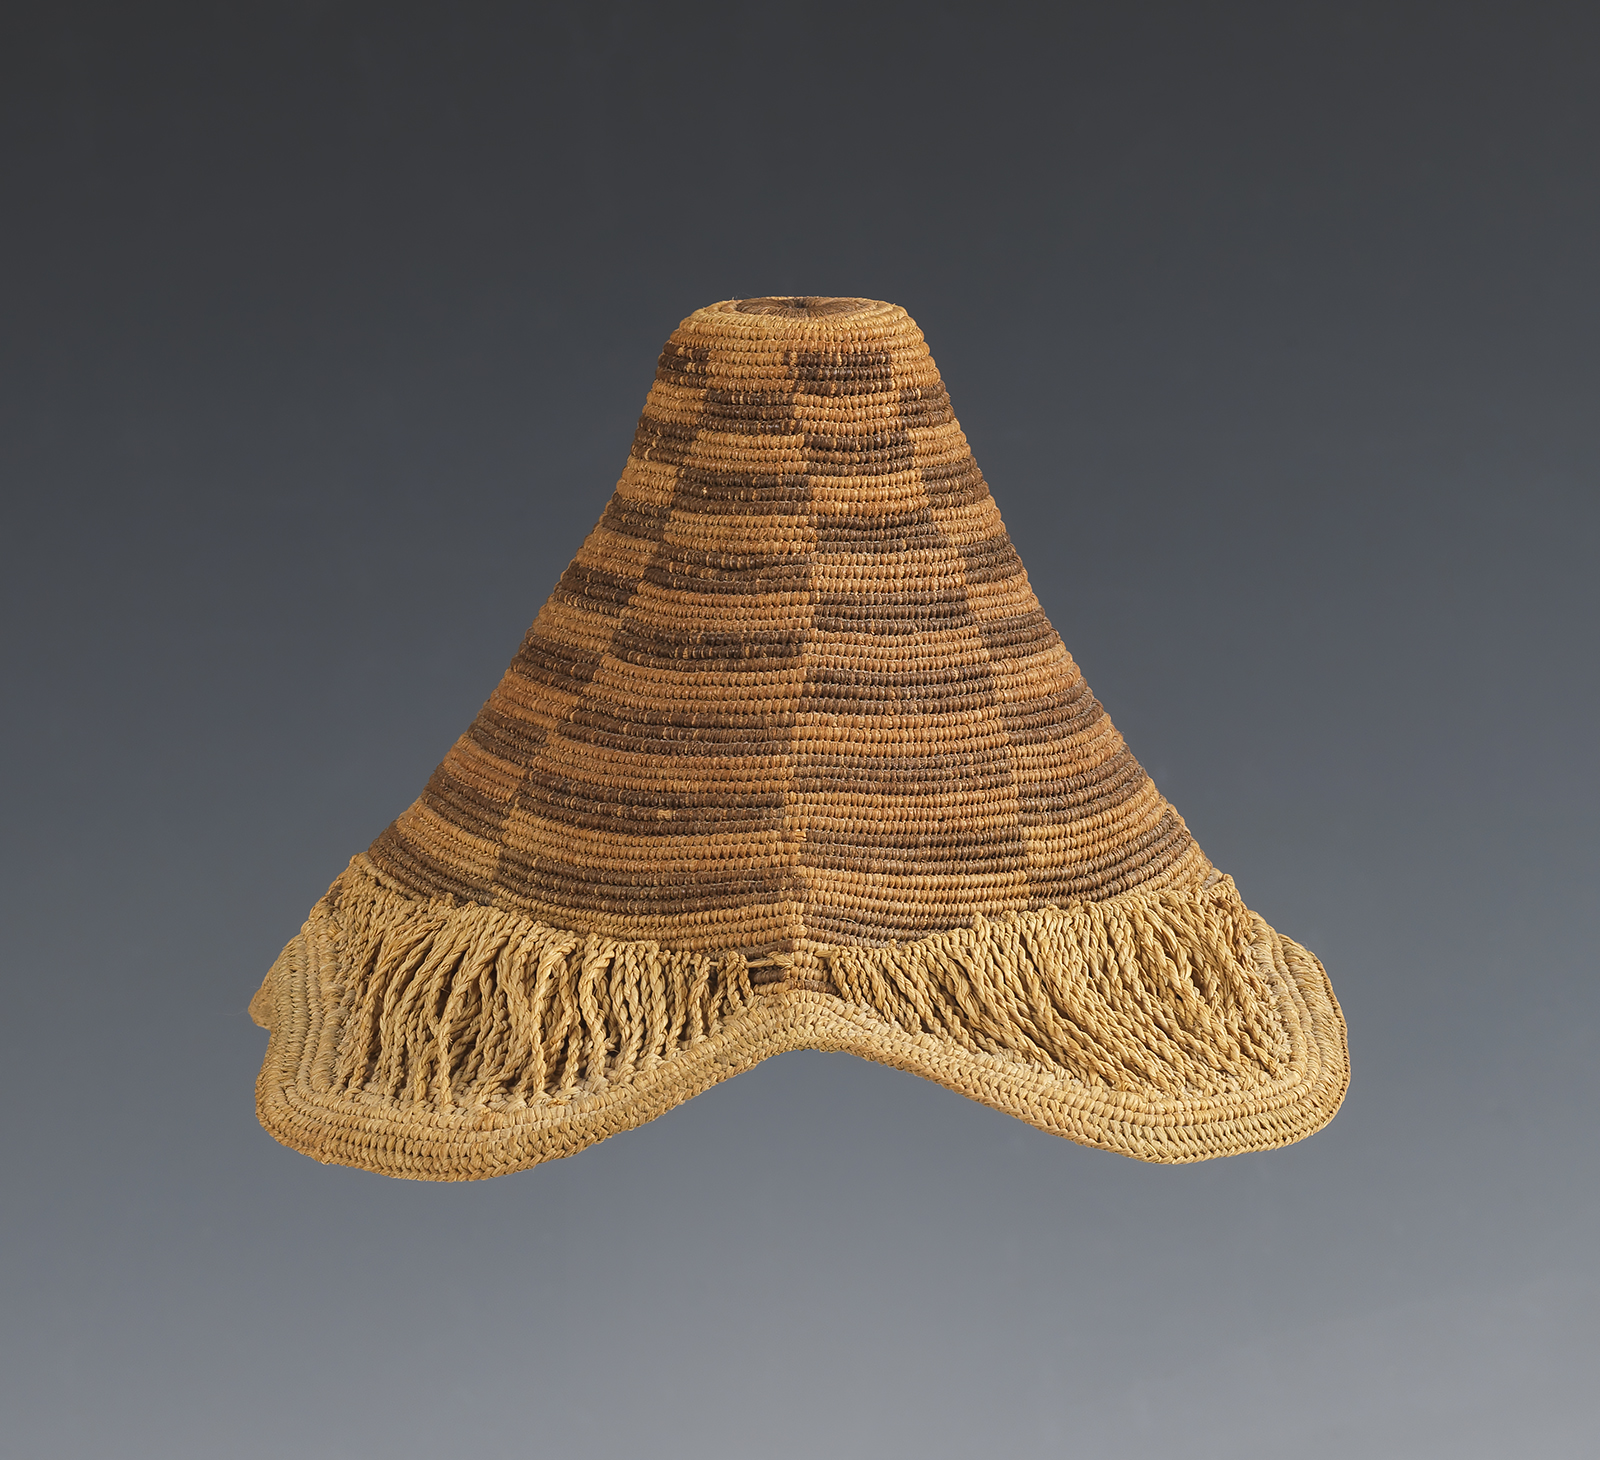 Titleholder’s Hat, Kuba people, DR Congo – SOLD – San Francisco Tribal